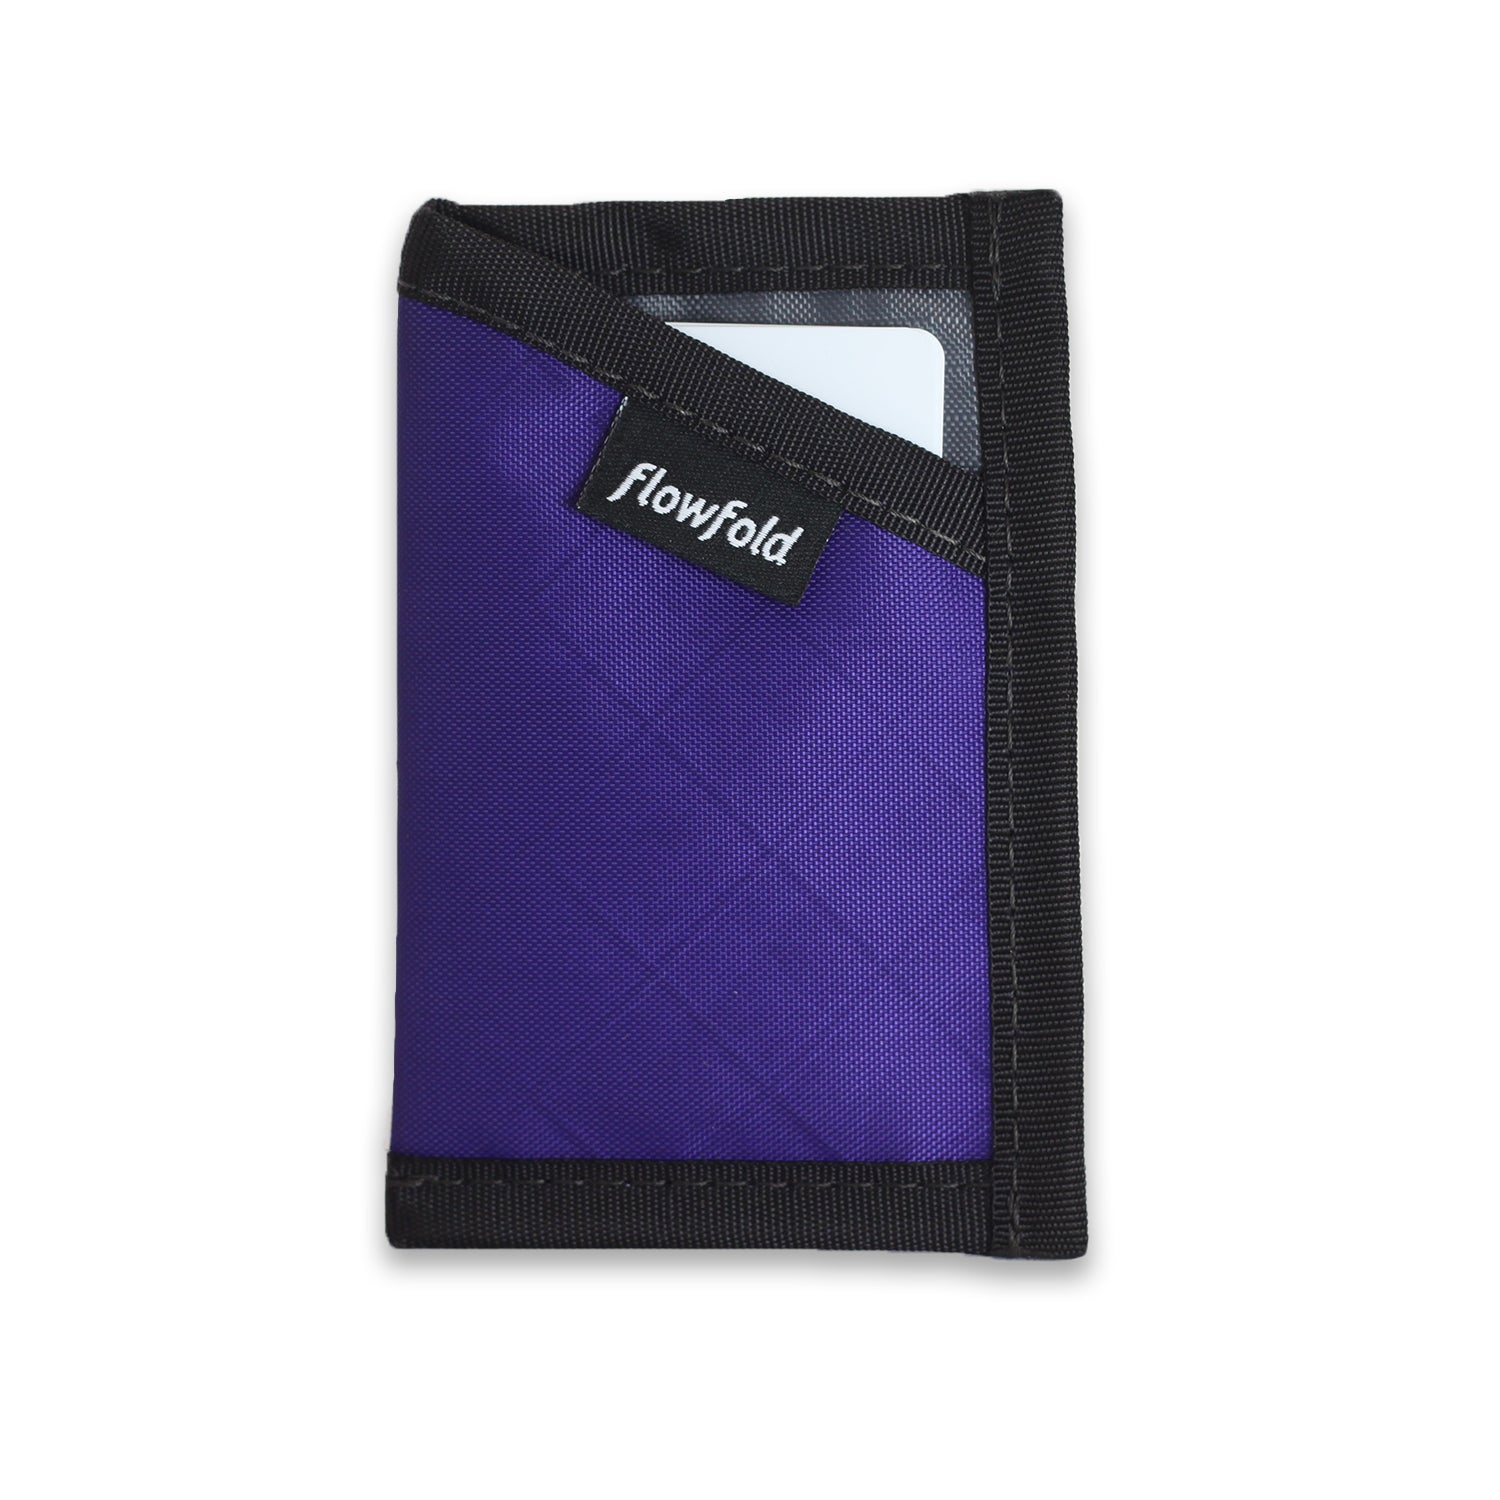 Flowfold RFID Blocking Minimalist Card Holder Wallet 